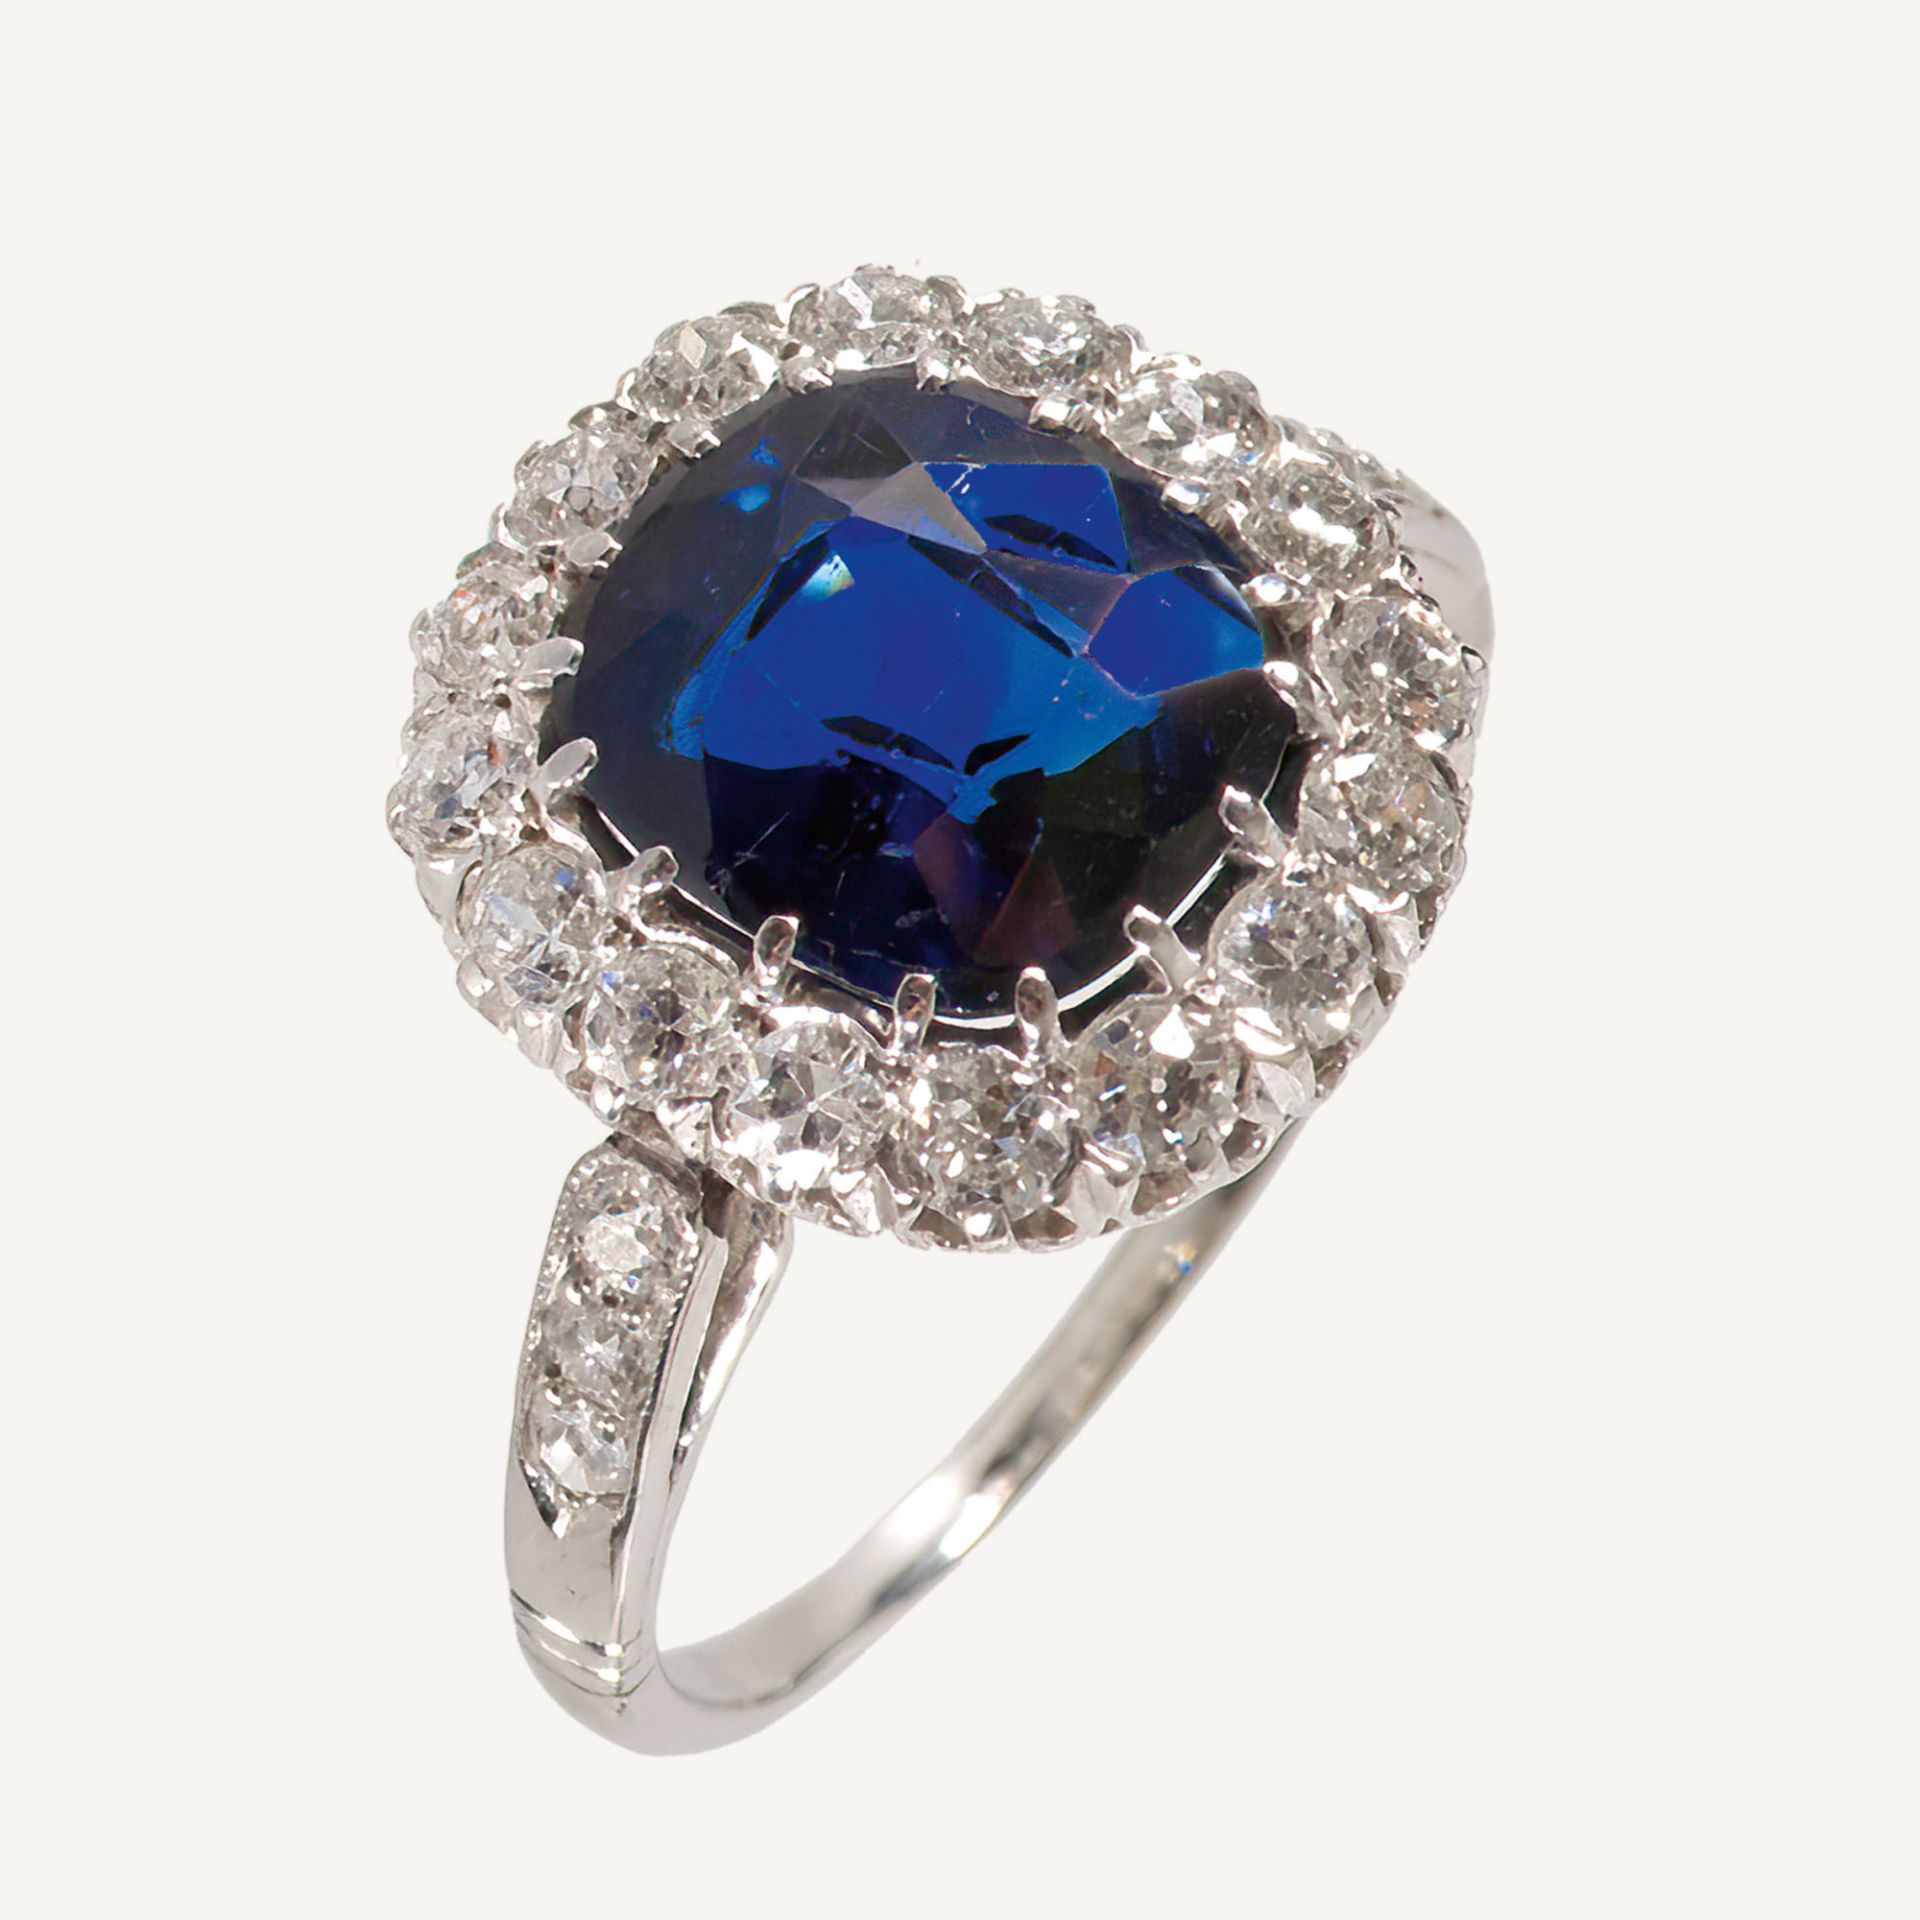 SAPHIR-BRILLANT-RING: Um 1920. / Sapphire-diamond-ring, Ca. 1920.